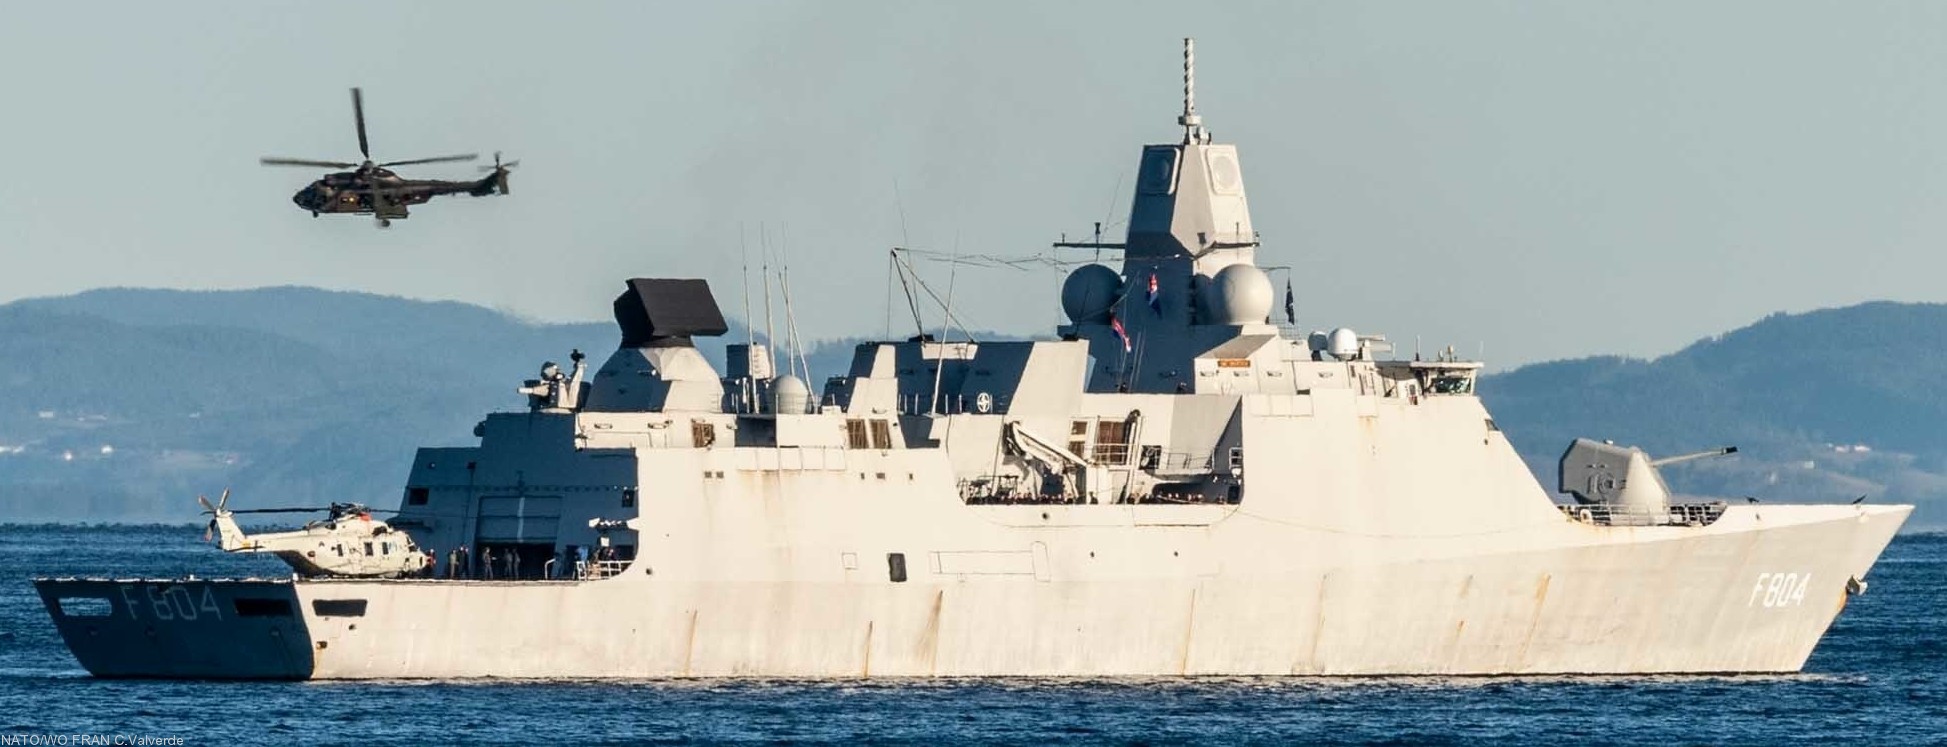 f-804 hnlms de ruyter guided missile frigate ffg lcf royal netherlands navy 15